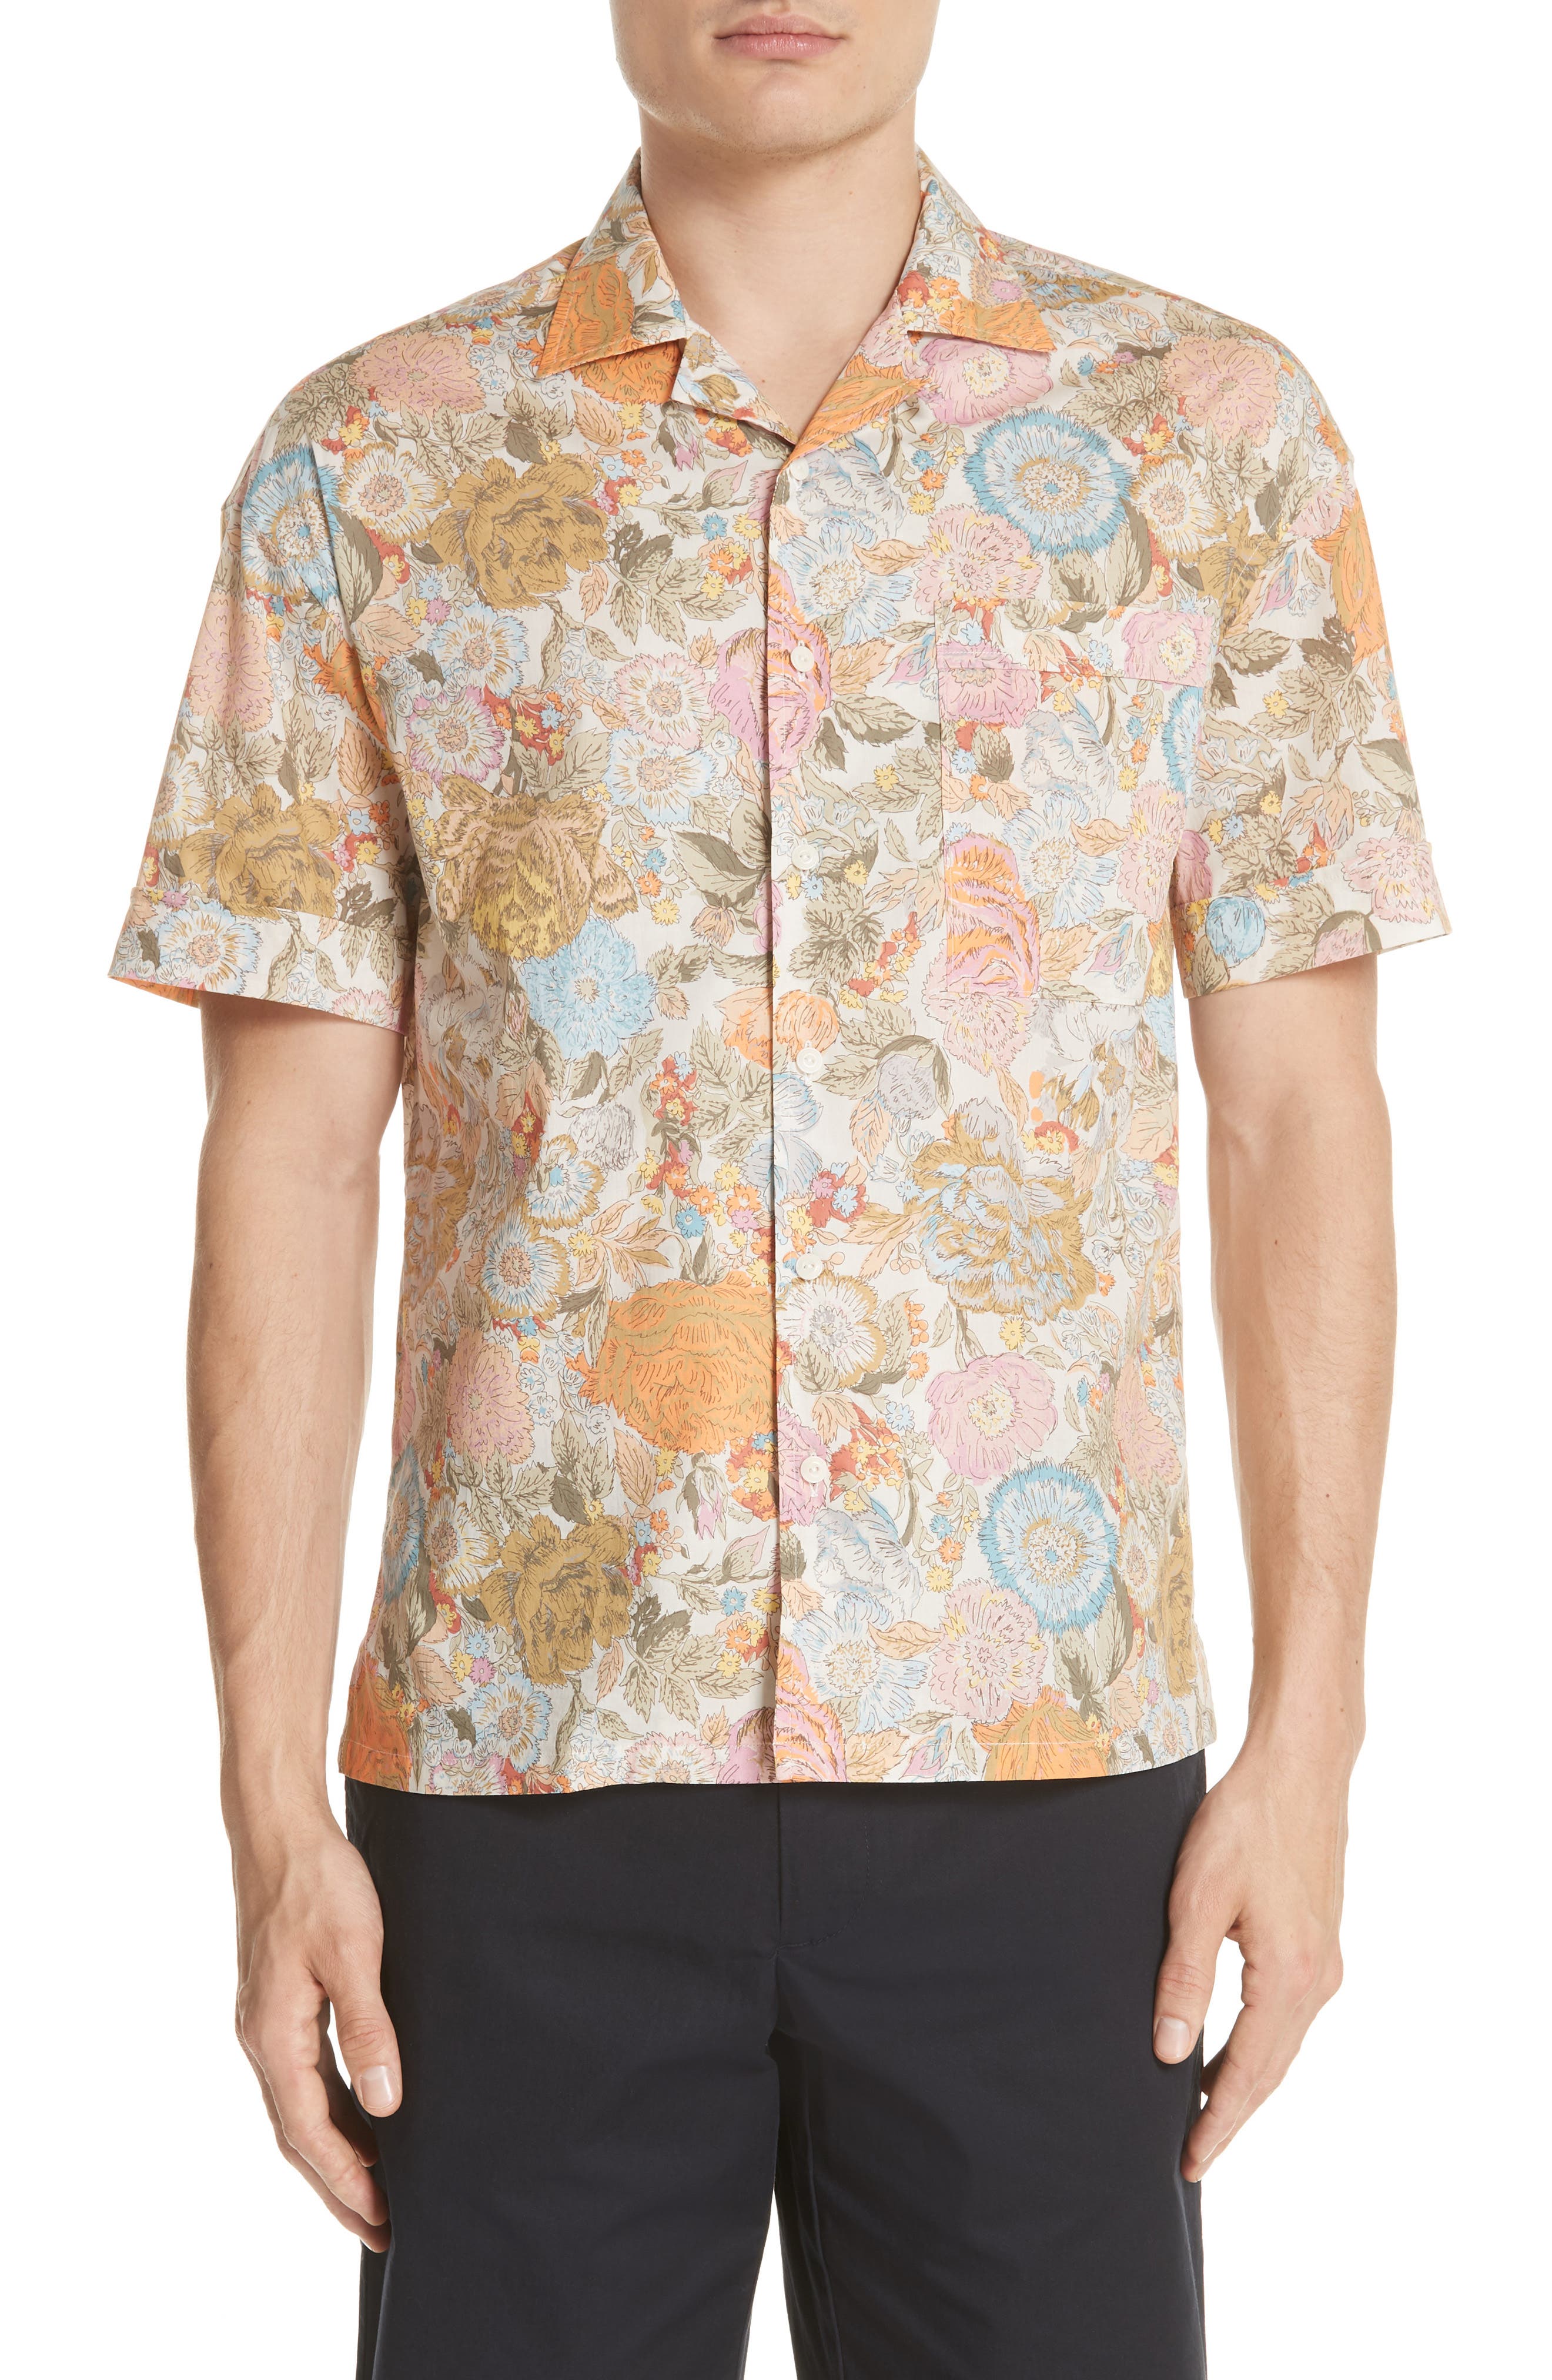 burberry floral shirt